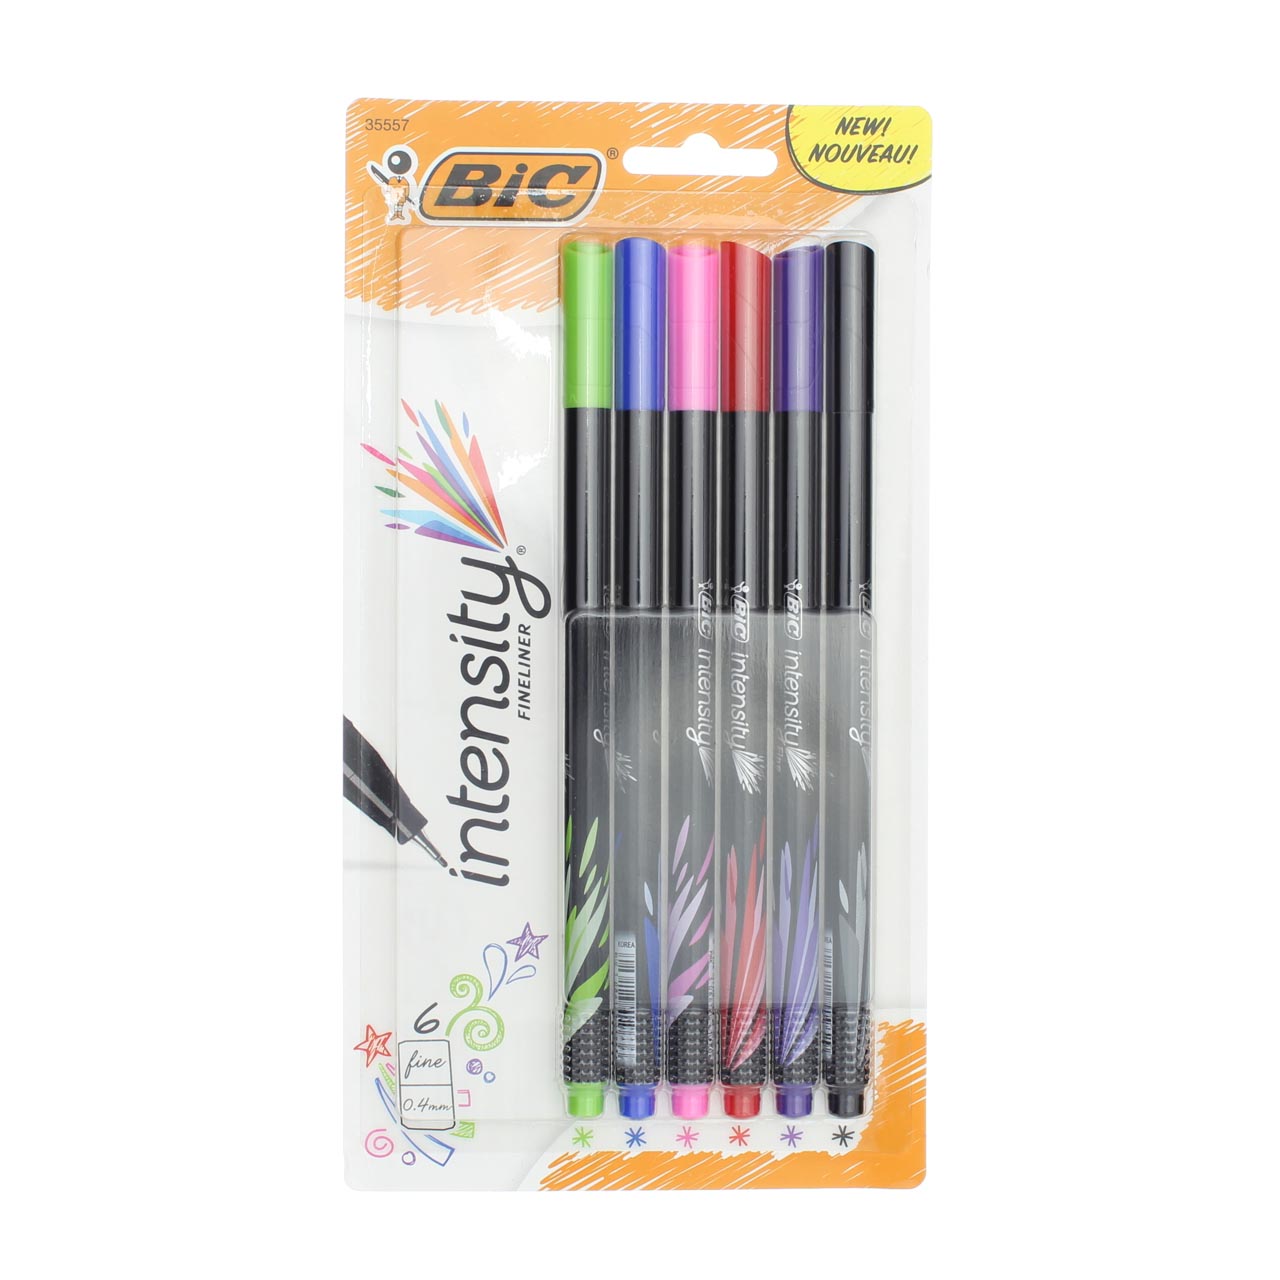 BIC - Intensity Fineliner Felt Pen, Fine Point (0.4 mm), Assorted Colors -  6 Ct/ each - 12 Pack